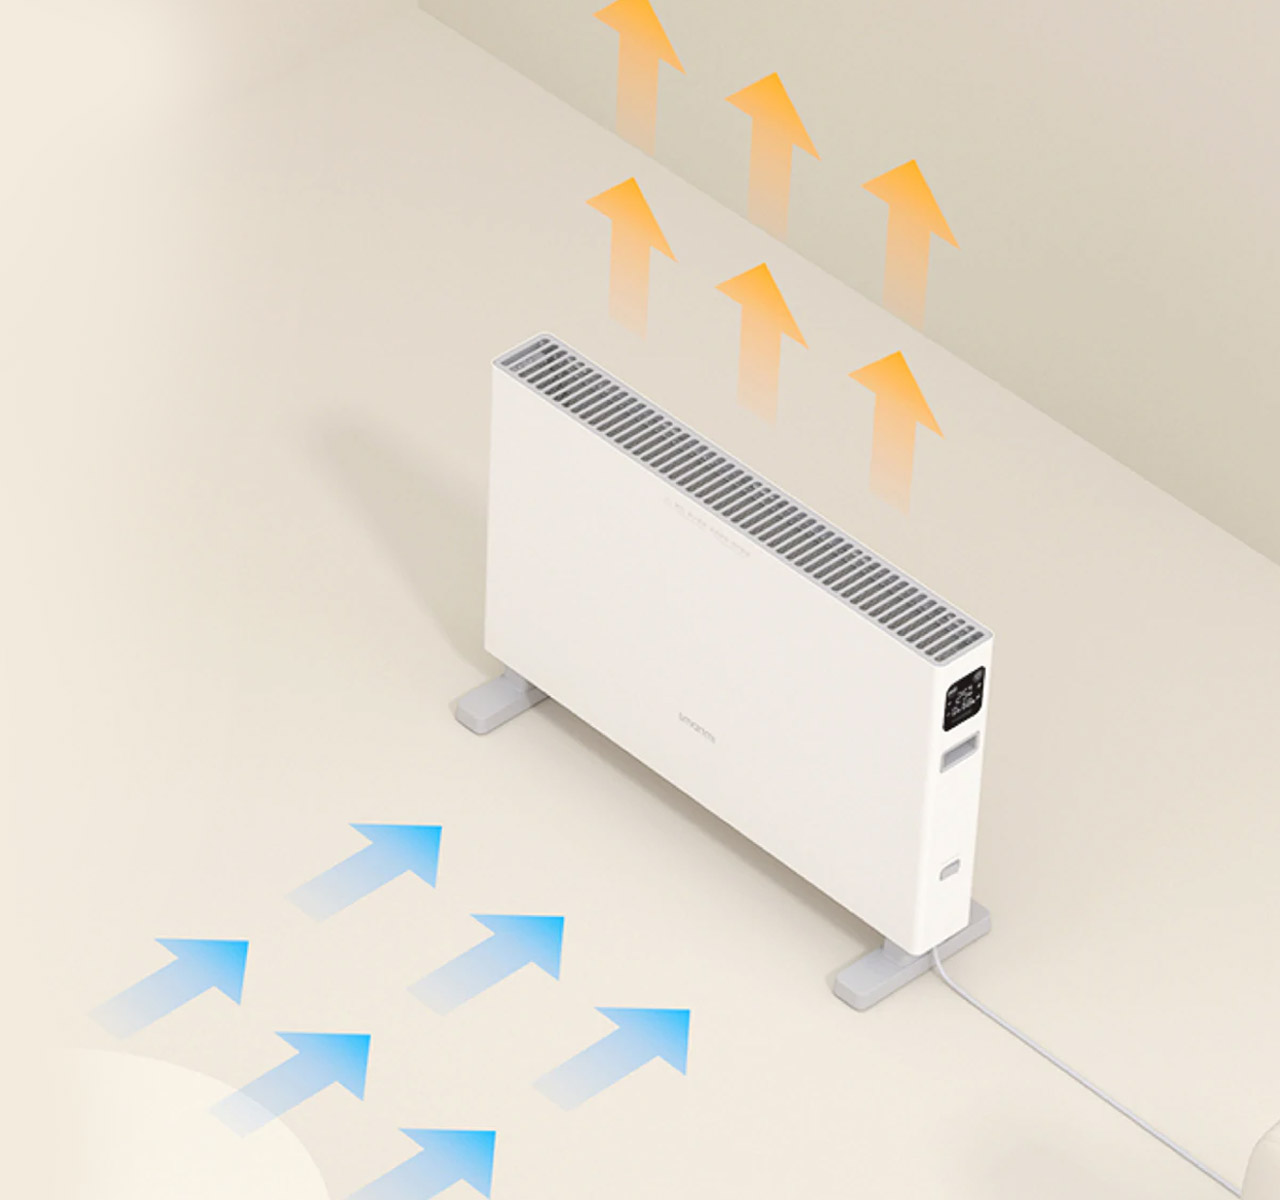 Smart space heater s. Xiaomi Smartmi Convector Heater 1s Smart. Конвекторный обогреватель Smartmi Smart Convector Heater 1s dnqznb05zm. Обогреватель Xiaomi Smartmi Electric Heater 1s. Конвектор Smartmi Smart Convector Heater 1s белый dnqznb05zm.